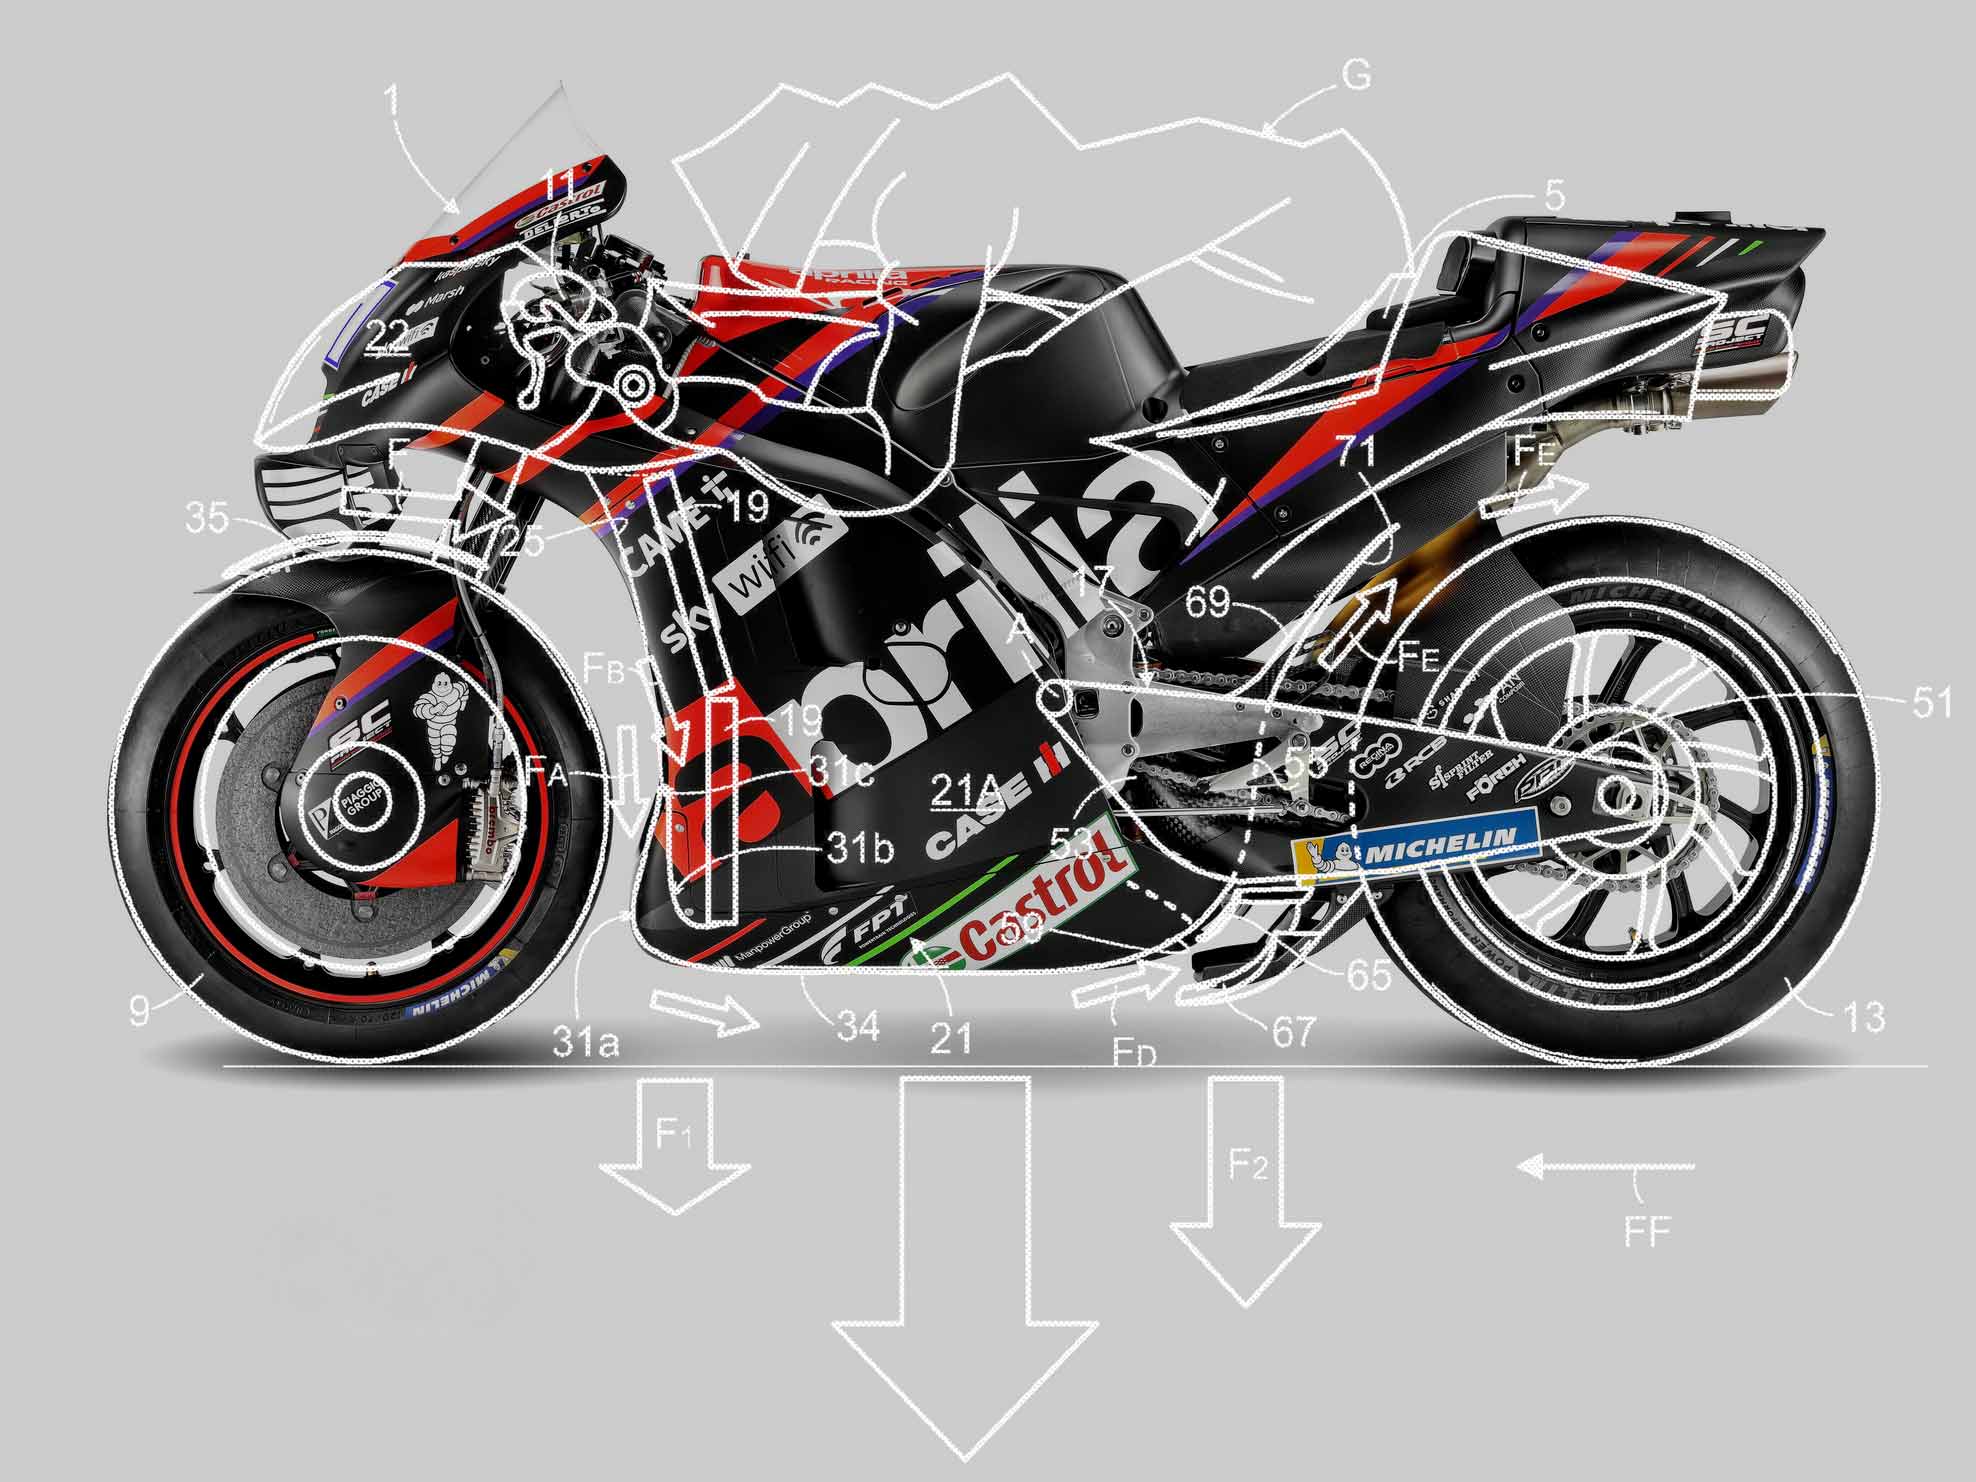 What makes MotoGP bikes so expensive?